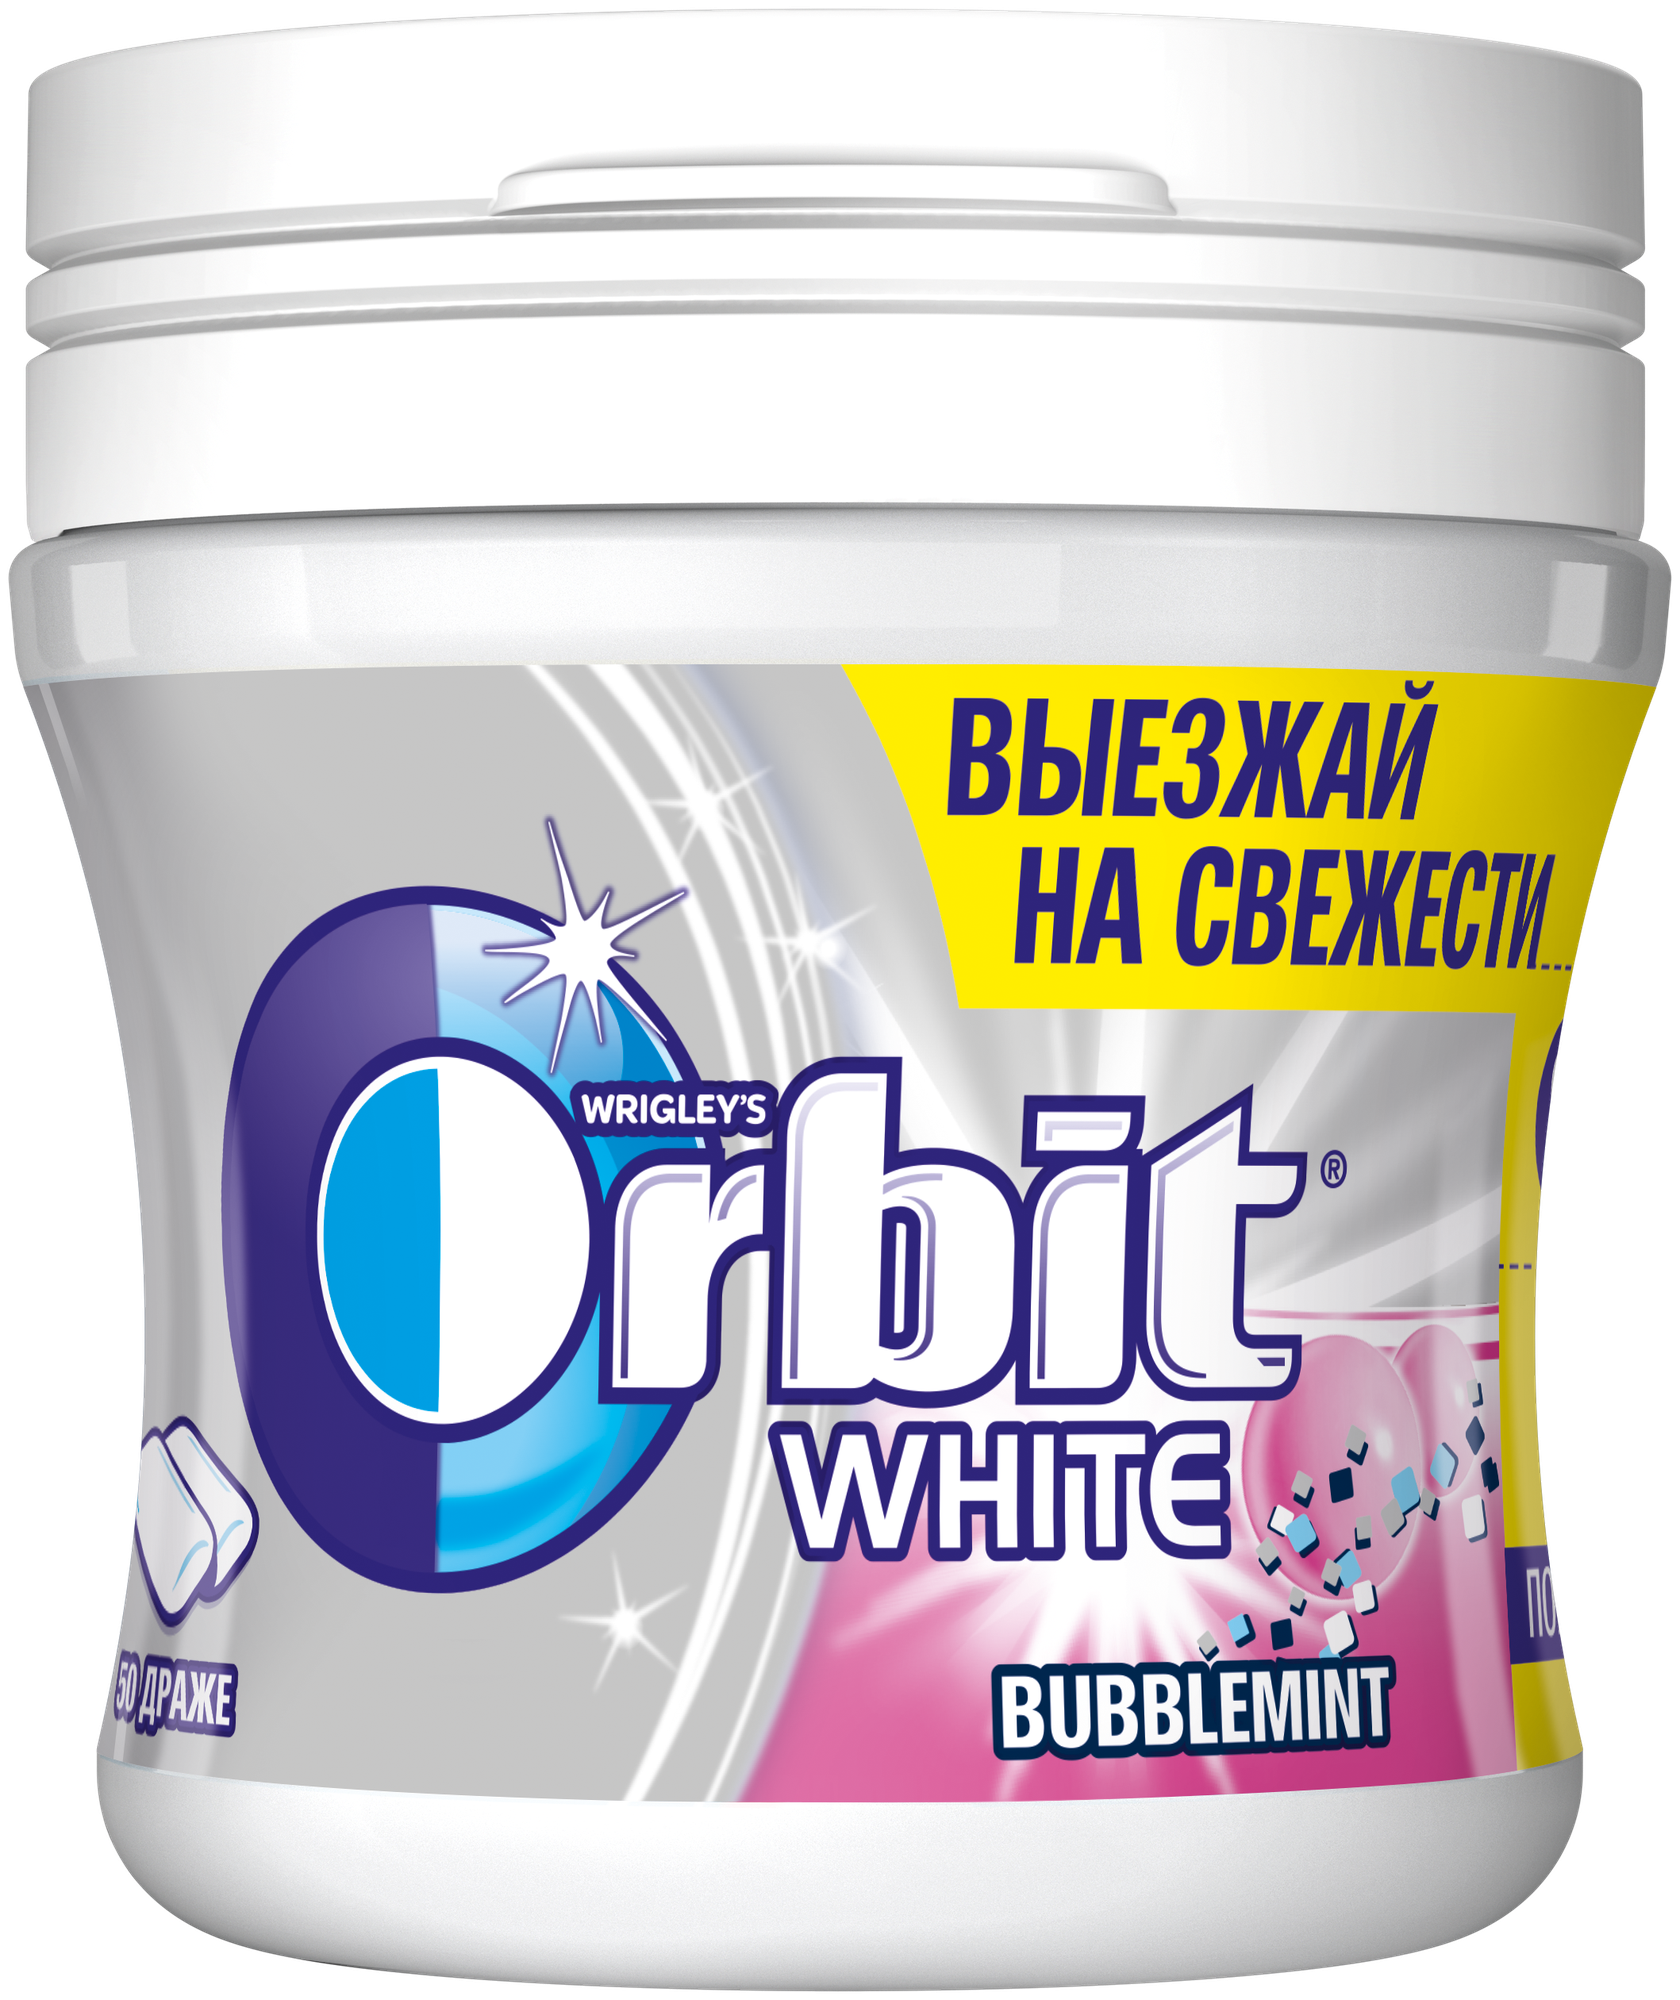 Жевательная резинка Orbit White Bubblemint без сахара, 68 г, 6 шт. в уп.